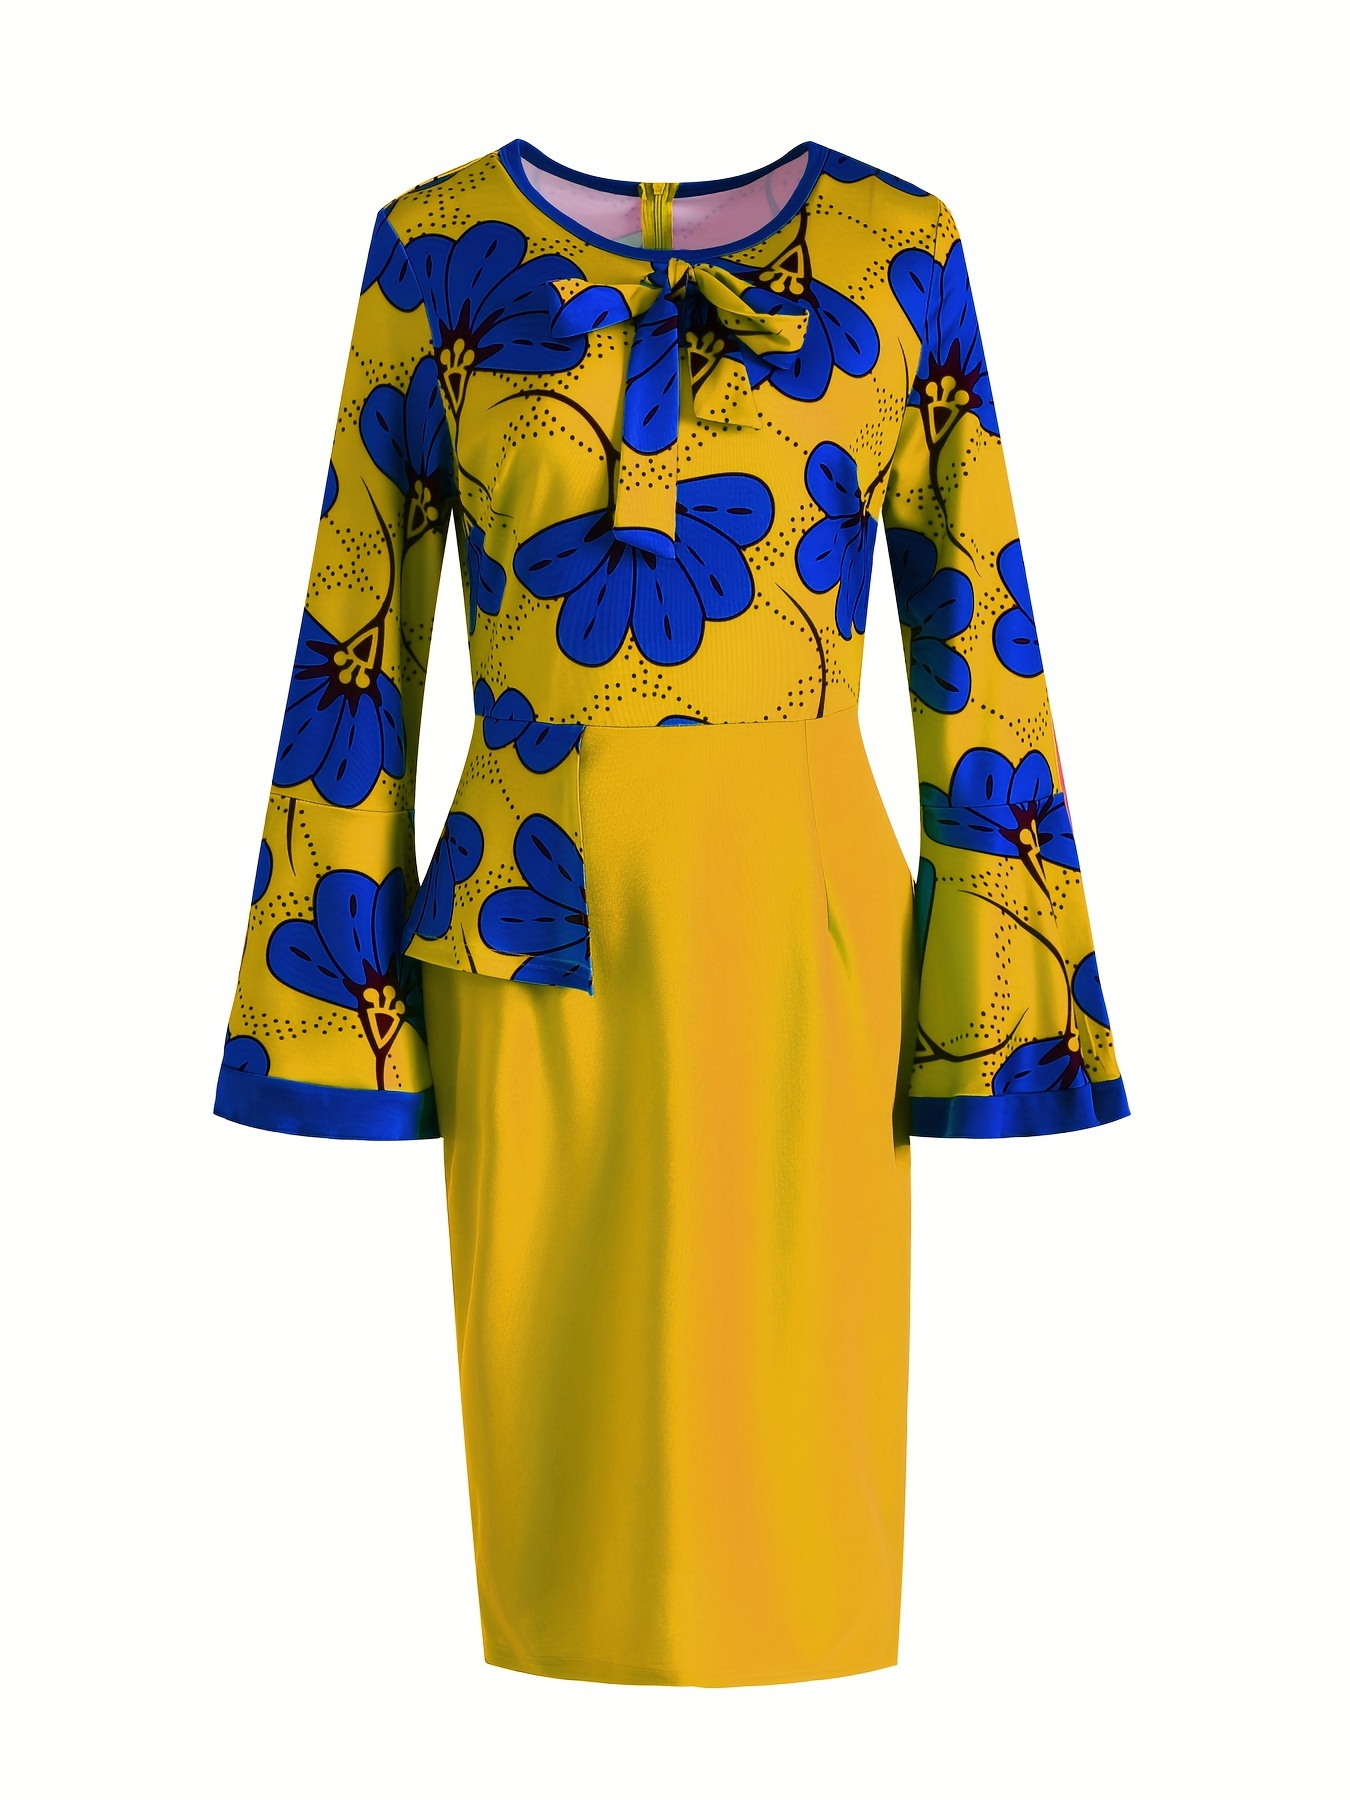 Floral Print Bodycon Splicing Φόρεμα, Κομψό Μακρυμάνικο Φόρεμα Για Την Άνοιξη Και Το Φθινόπωρο, Γυναικεία Ρούχα